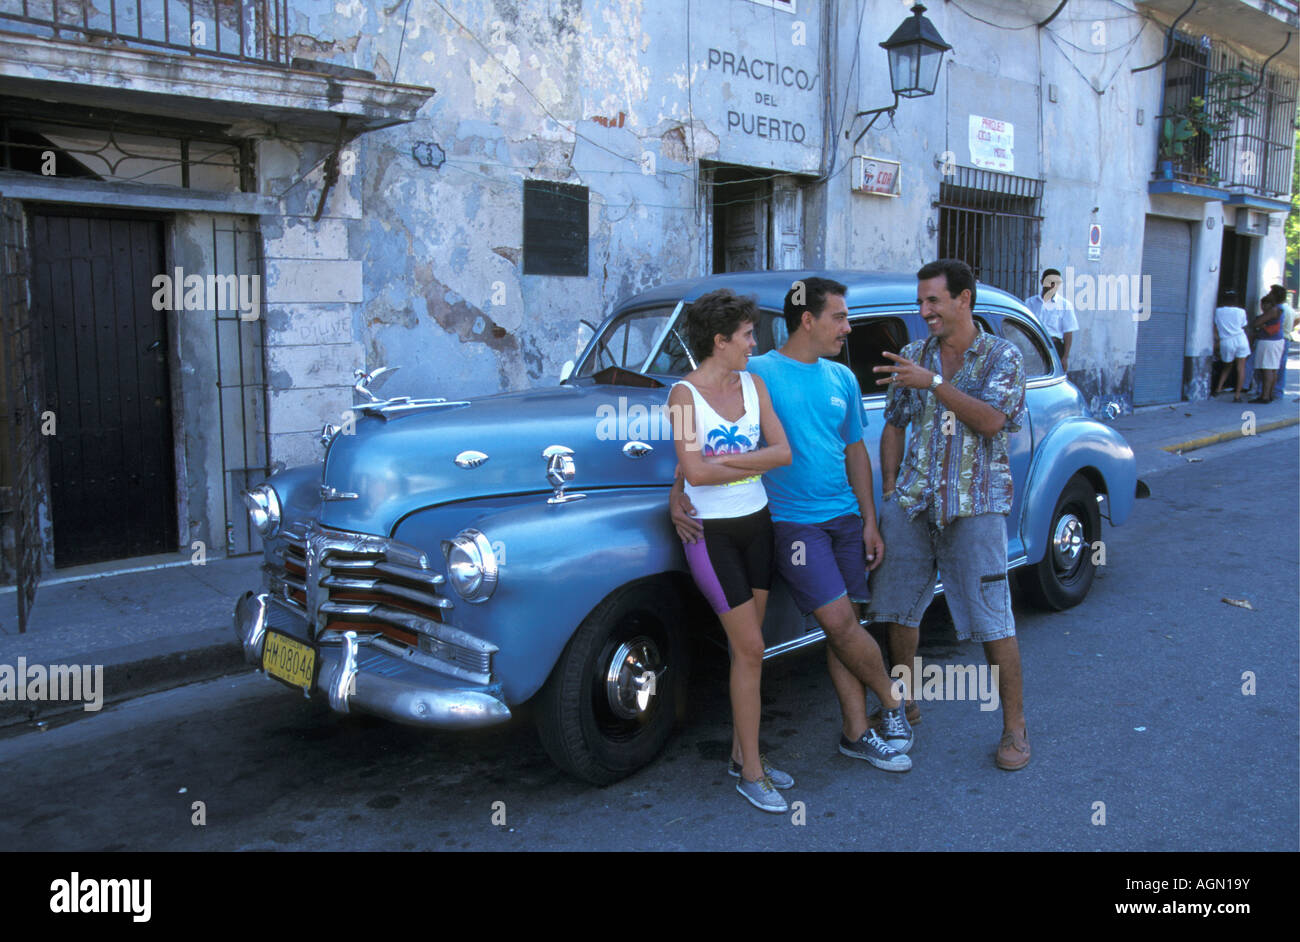 Cuba Havana People standing in front of old car Stock Photo